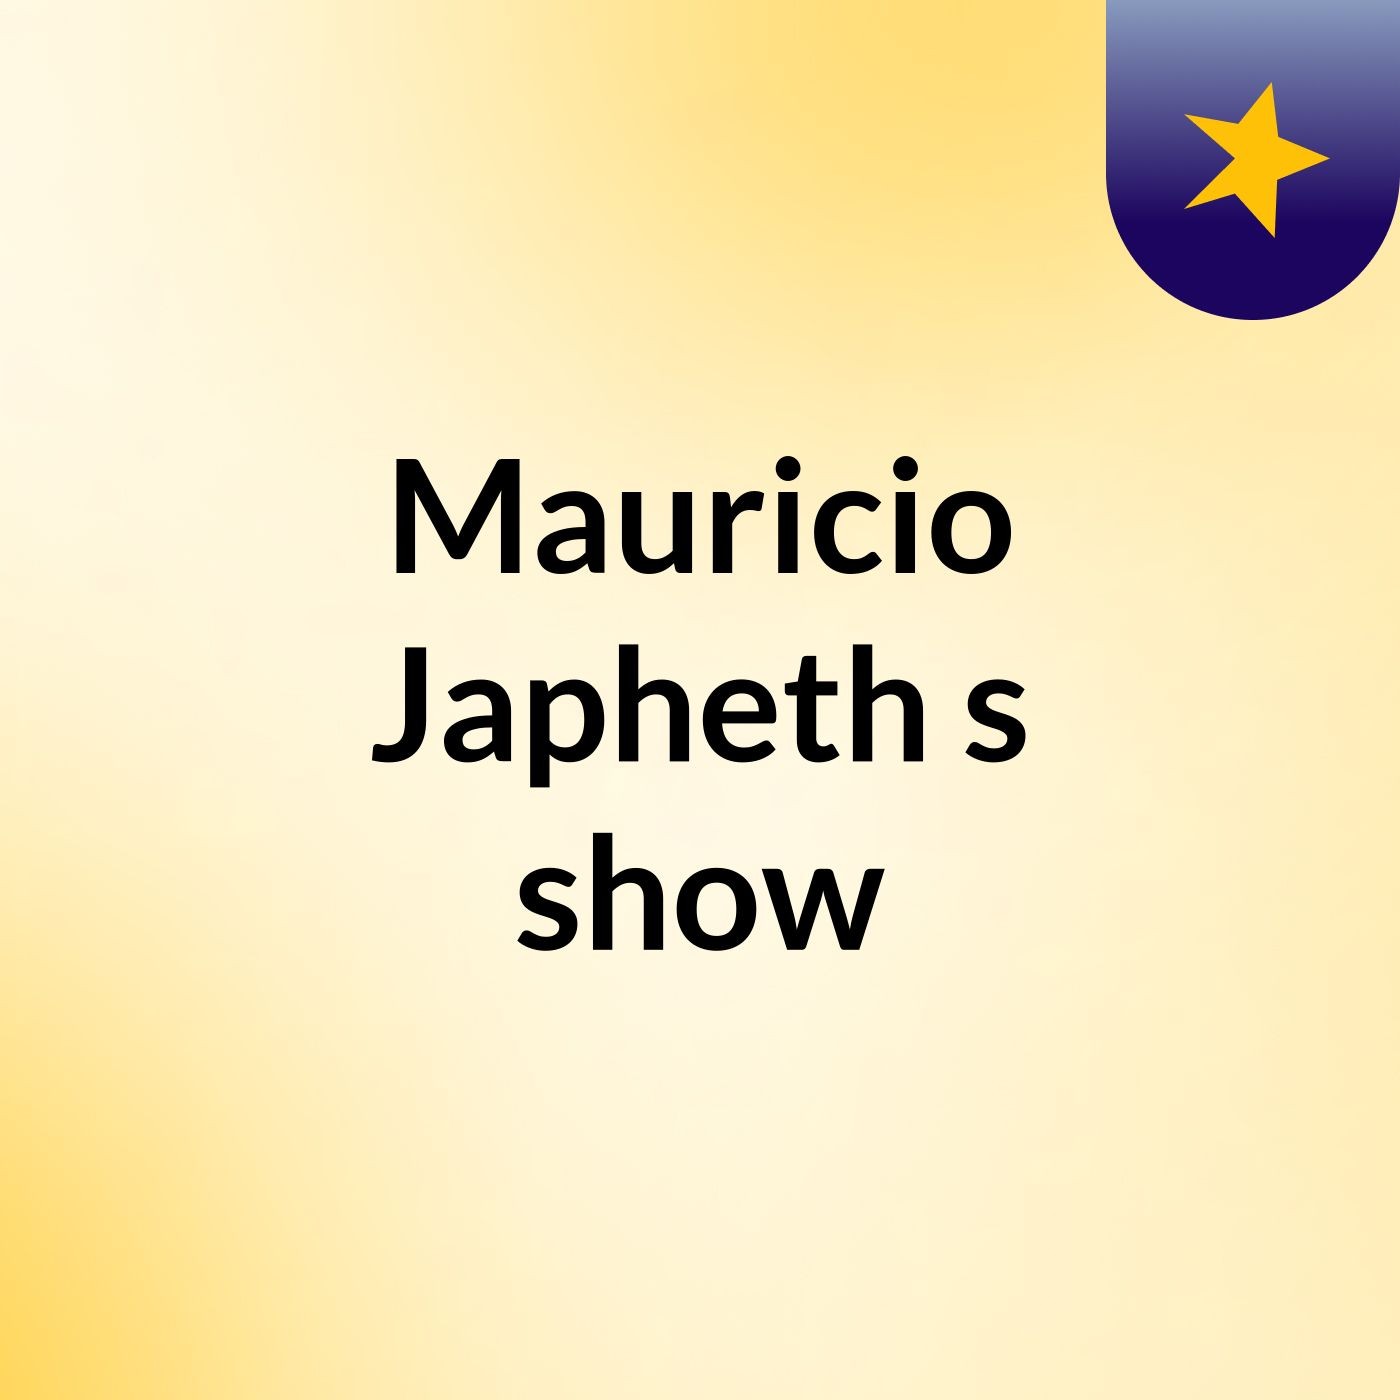 Mauricio Japheth's show